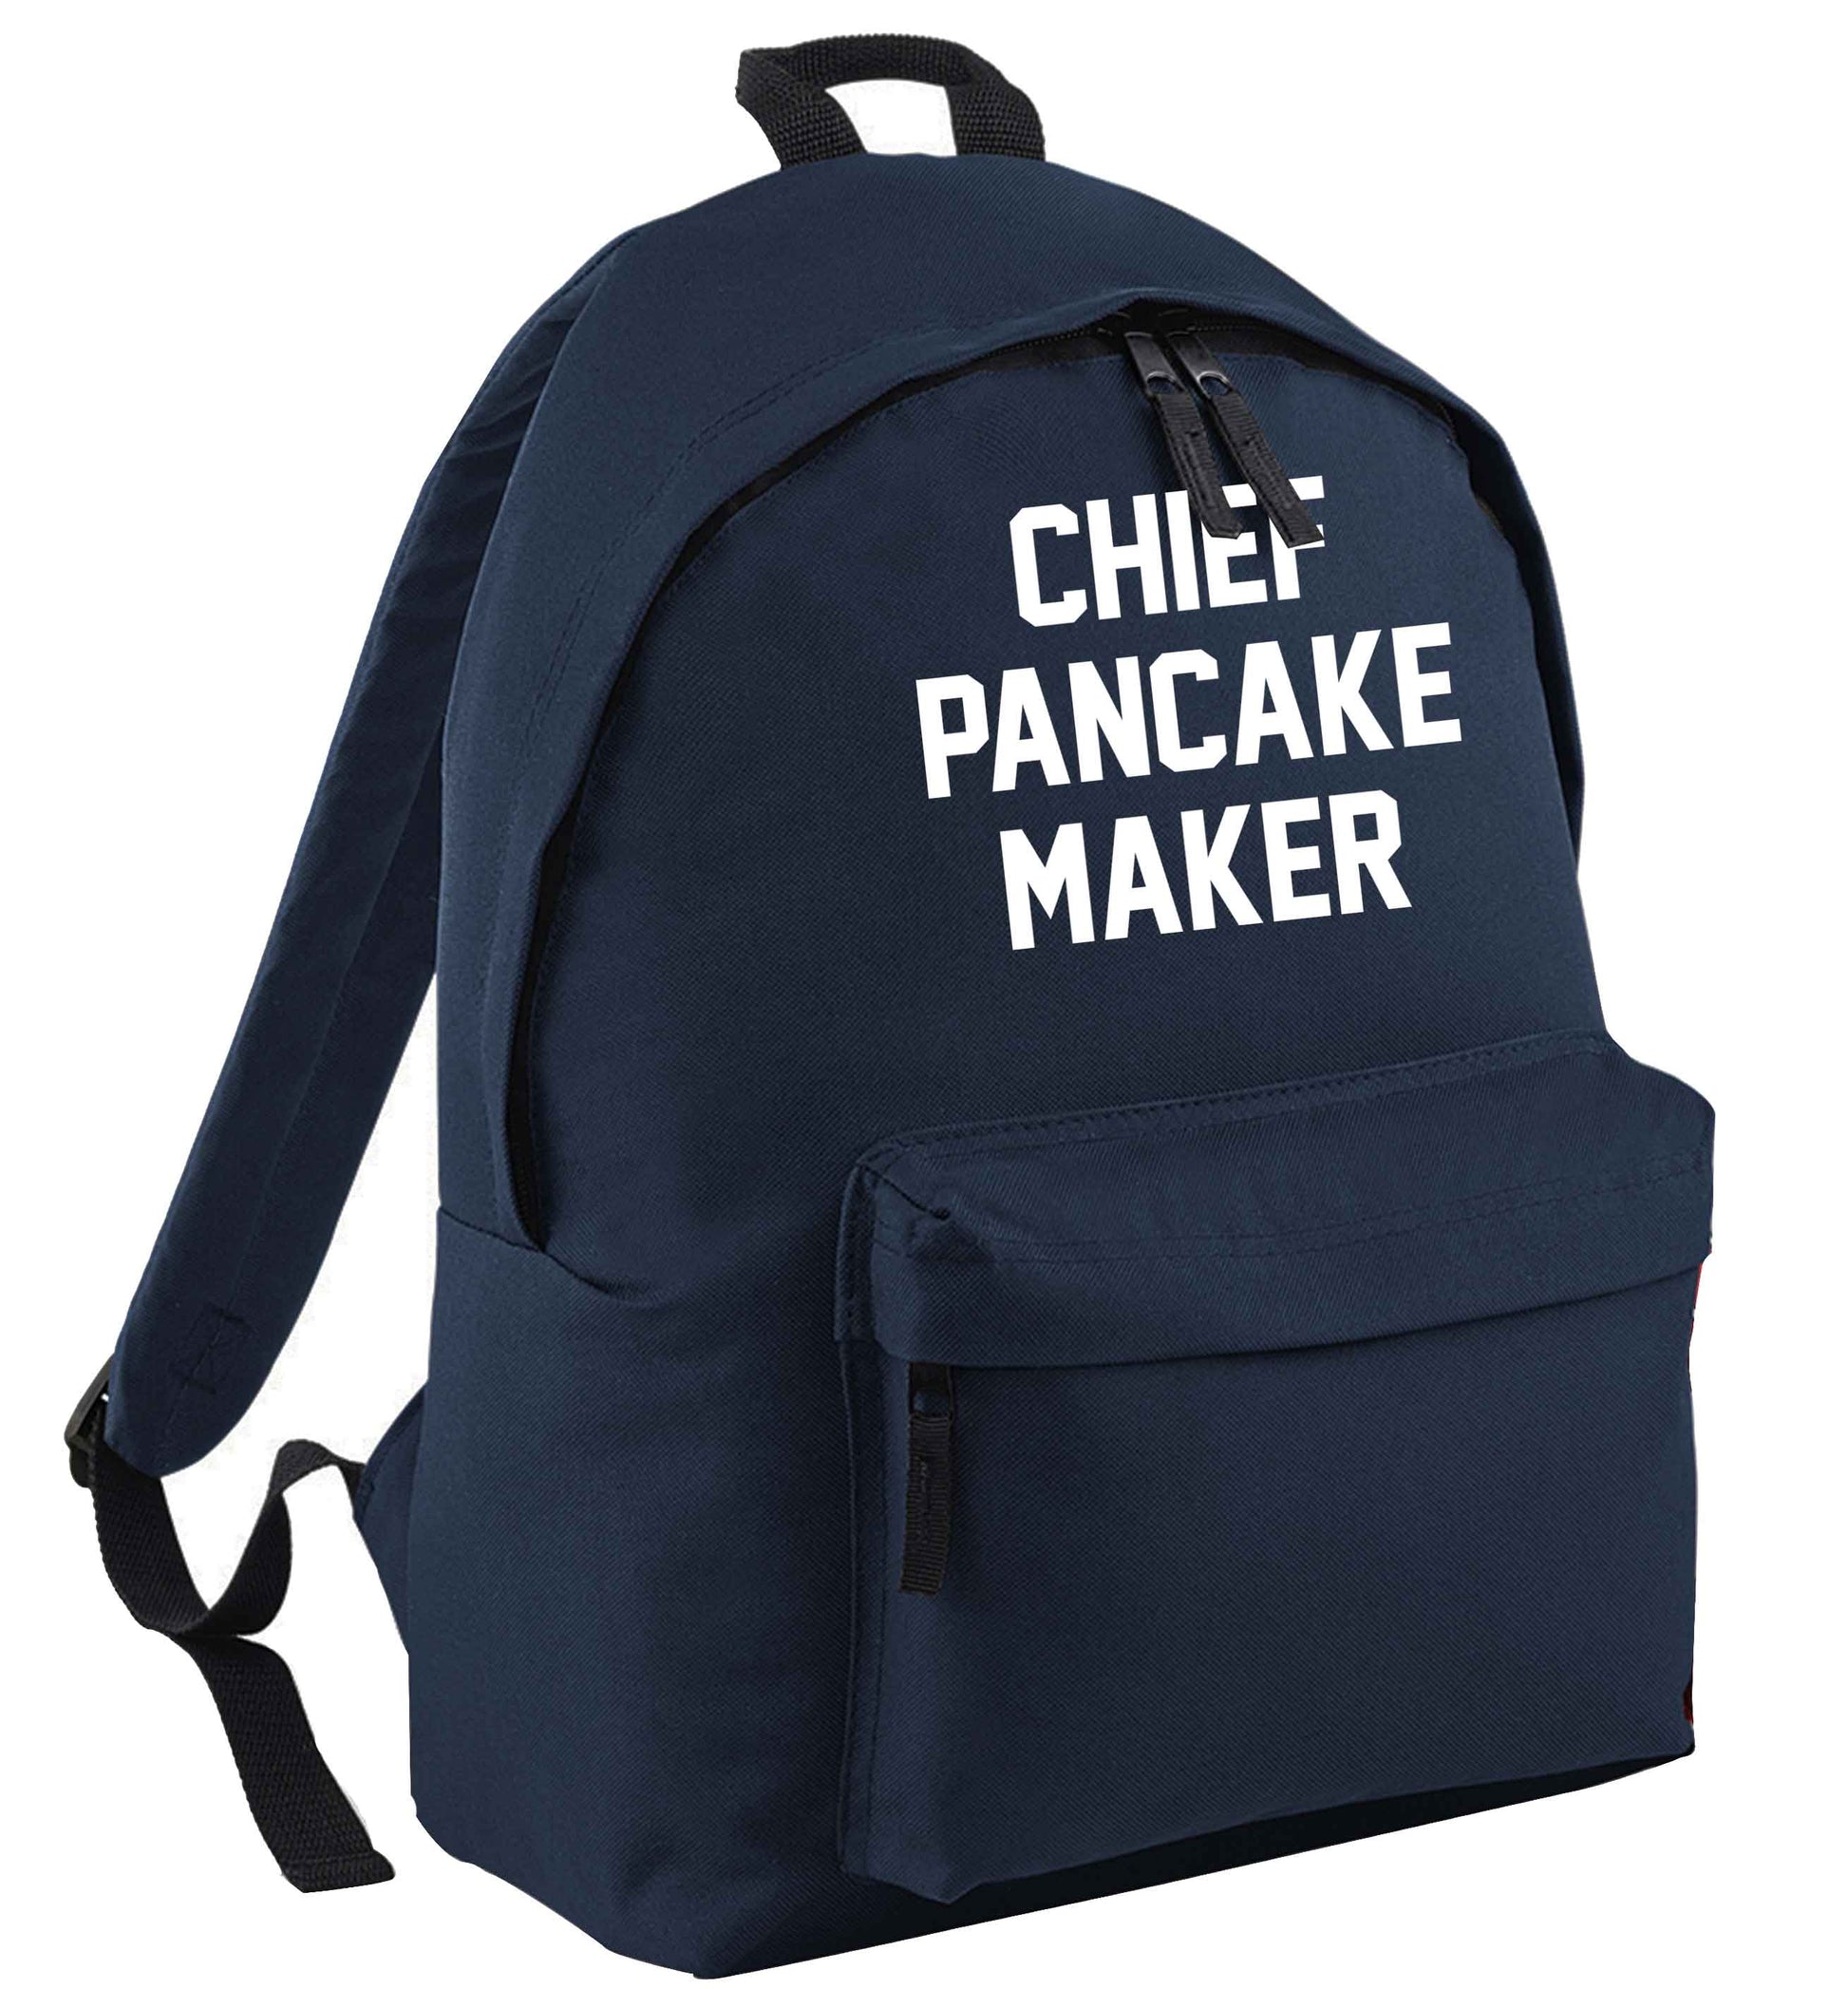 Chief pancake maker navy childrens backpack